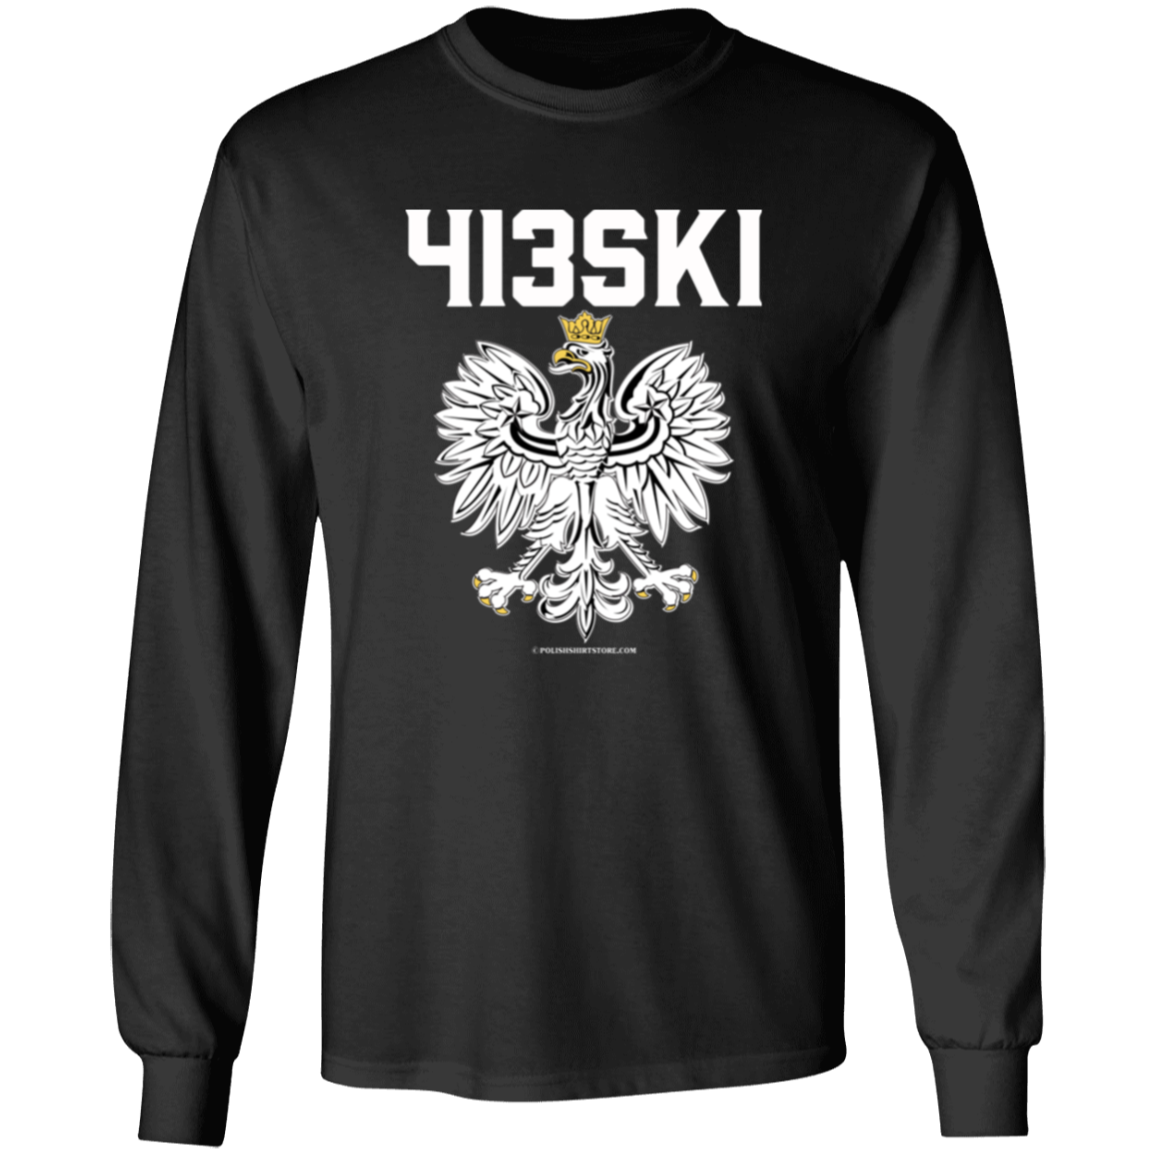 413SKI Apparel CustomCat G240 LS Ultra Cotton T-Shirt Black S